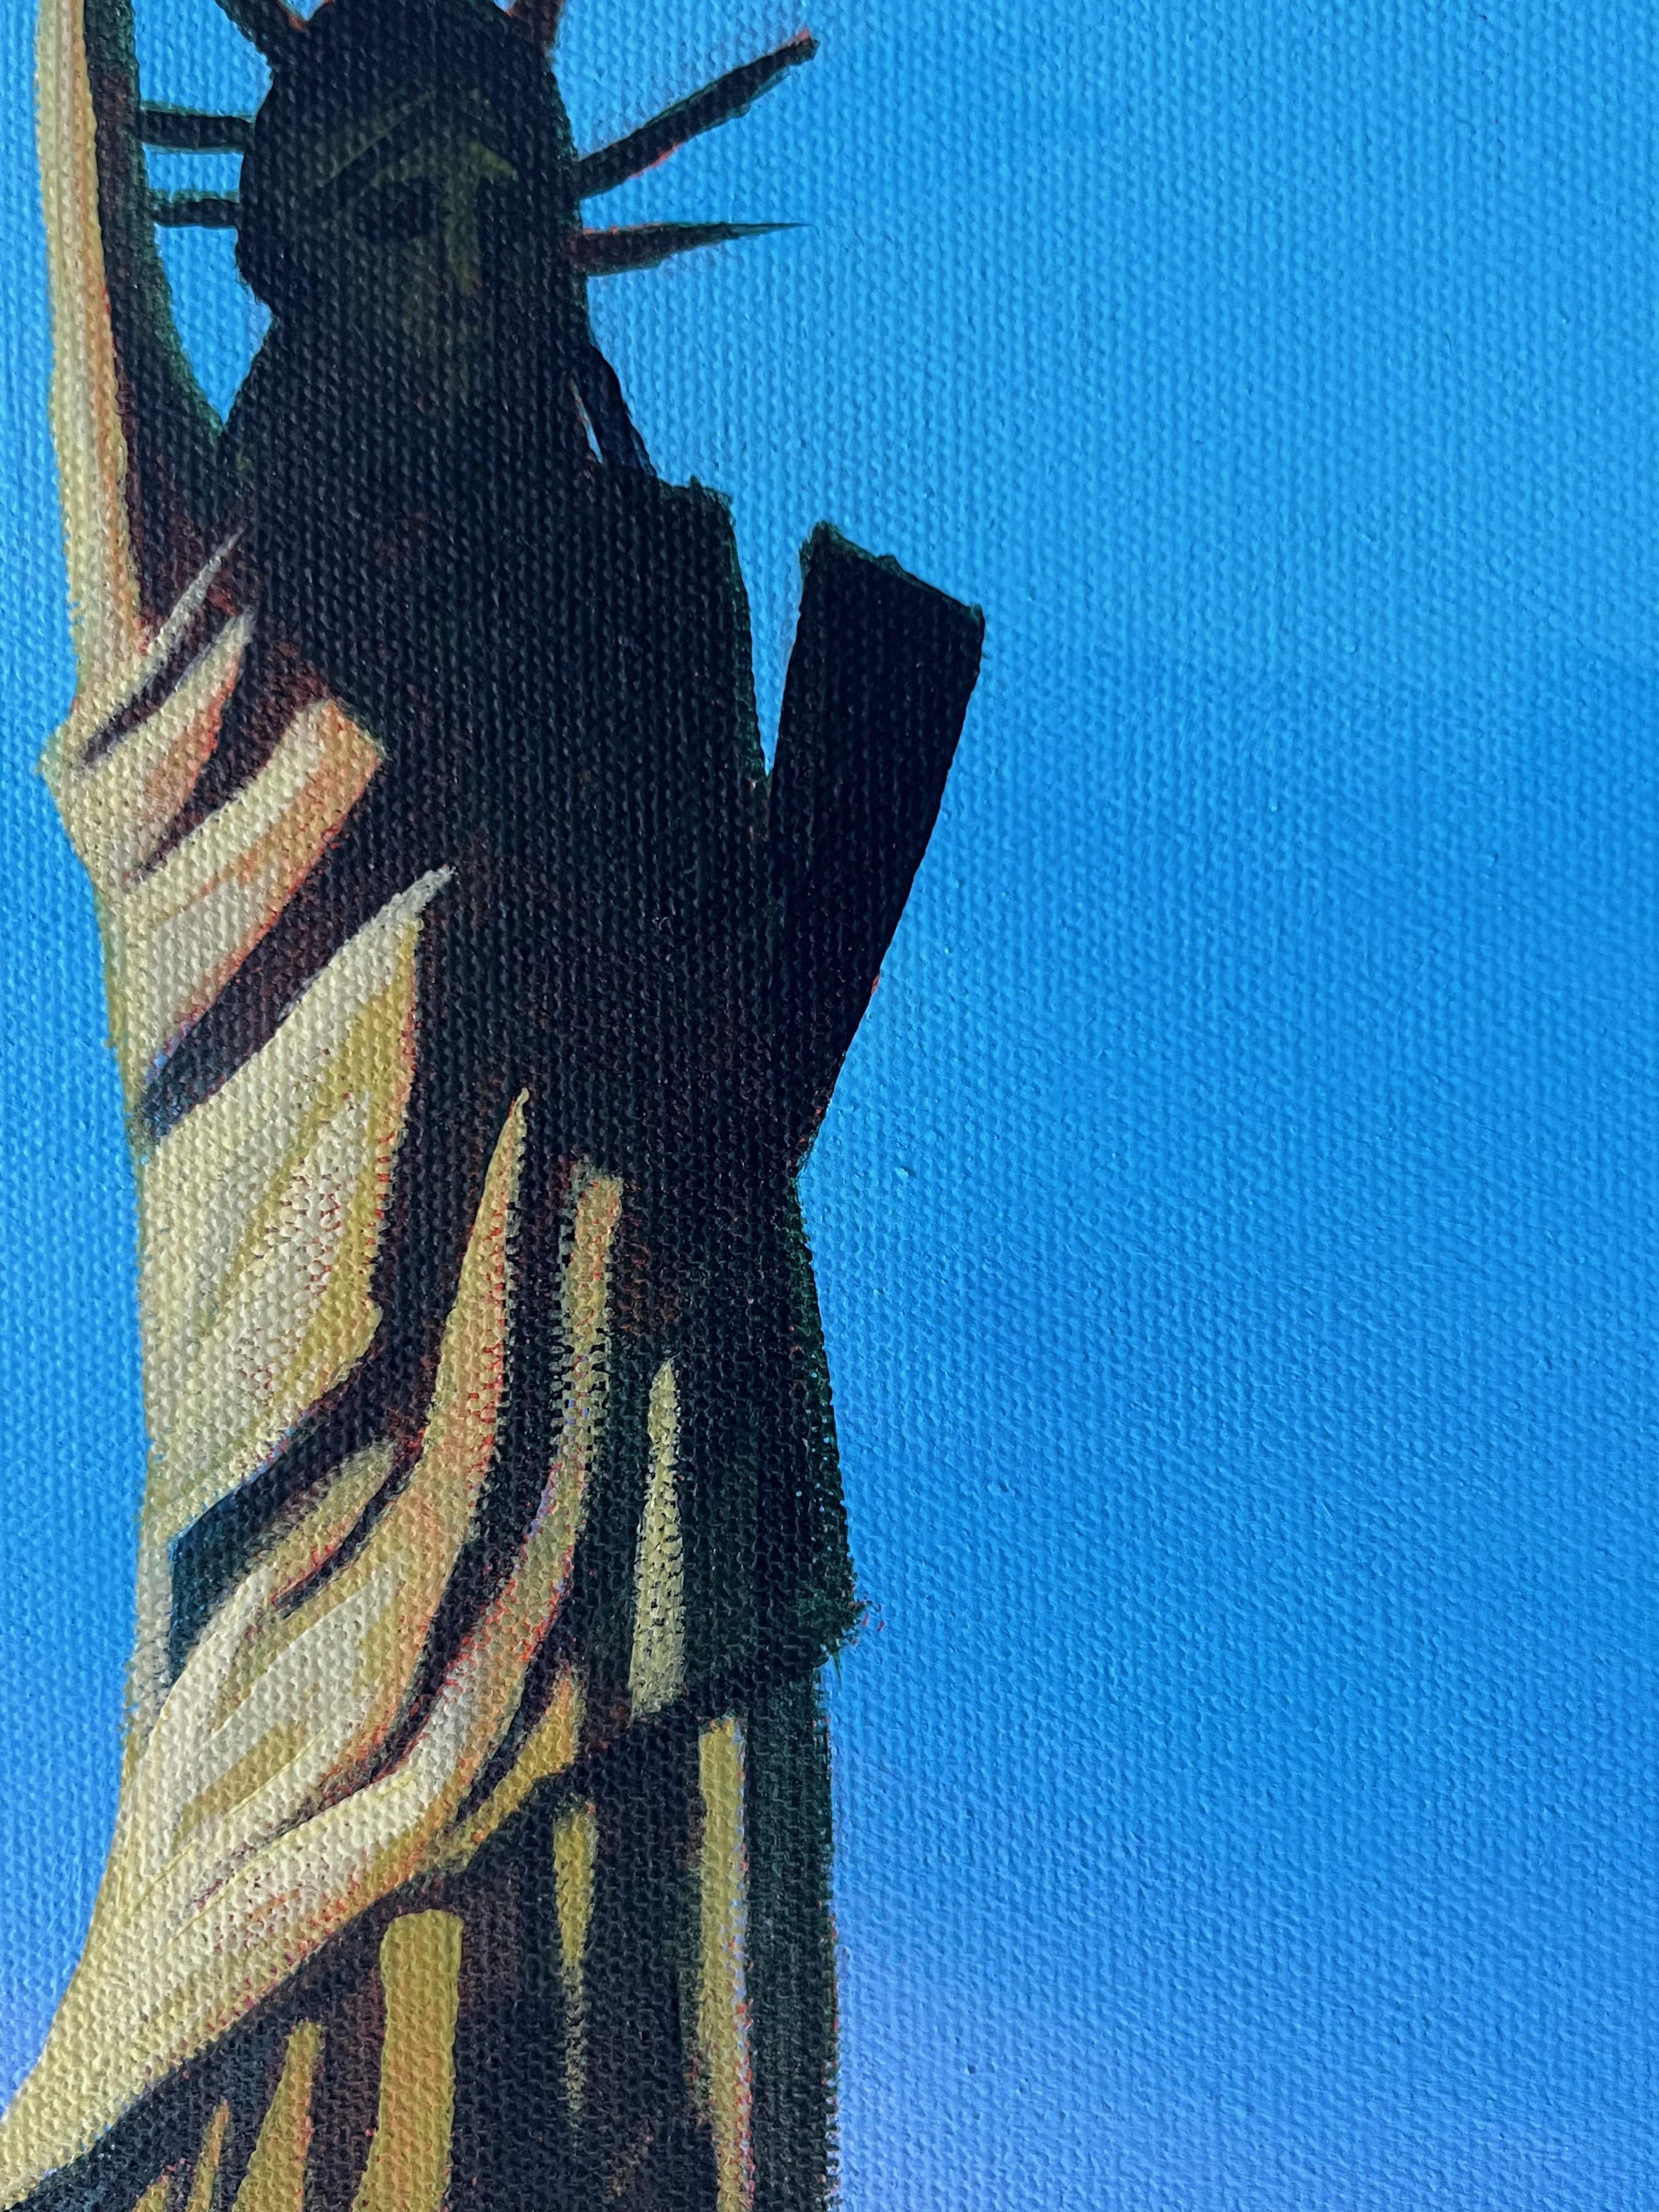 Lady Liberty, Originalgemälde (Blau), Landscape Painting, von Brian Callaghan